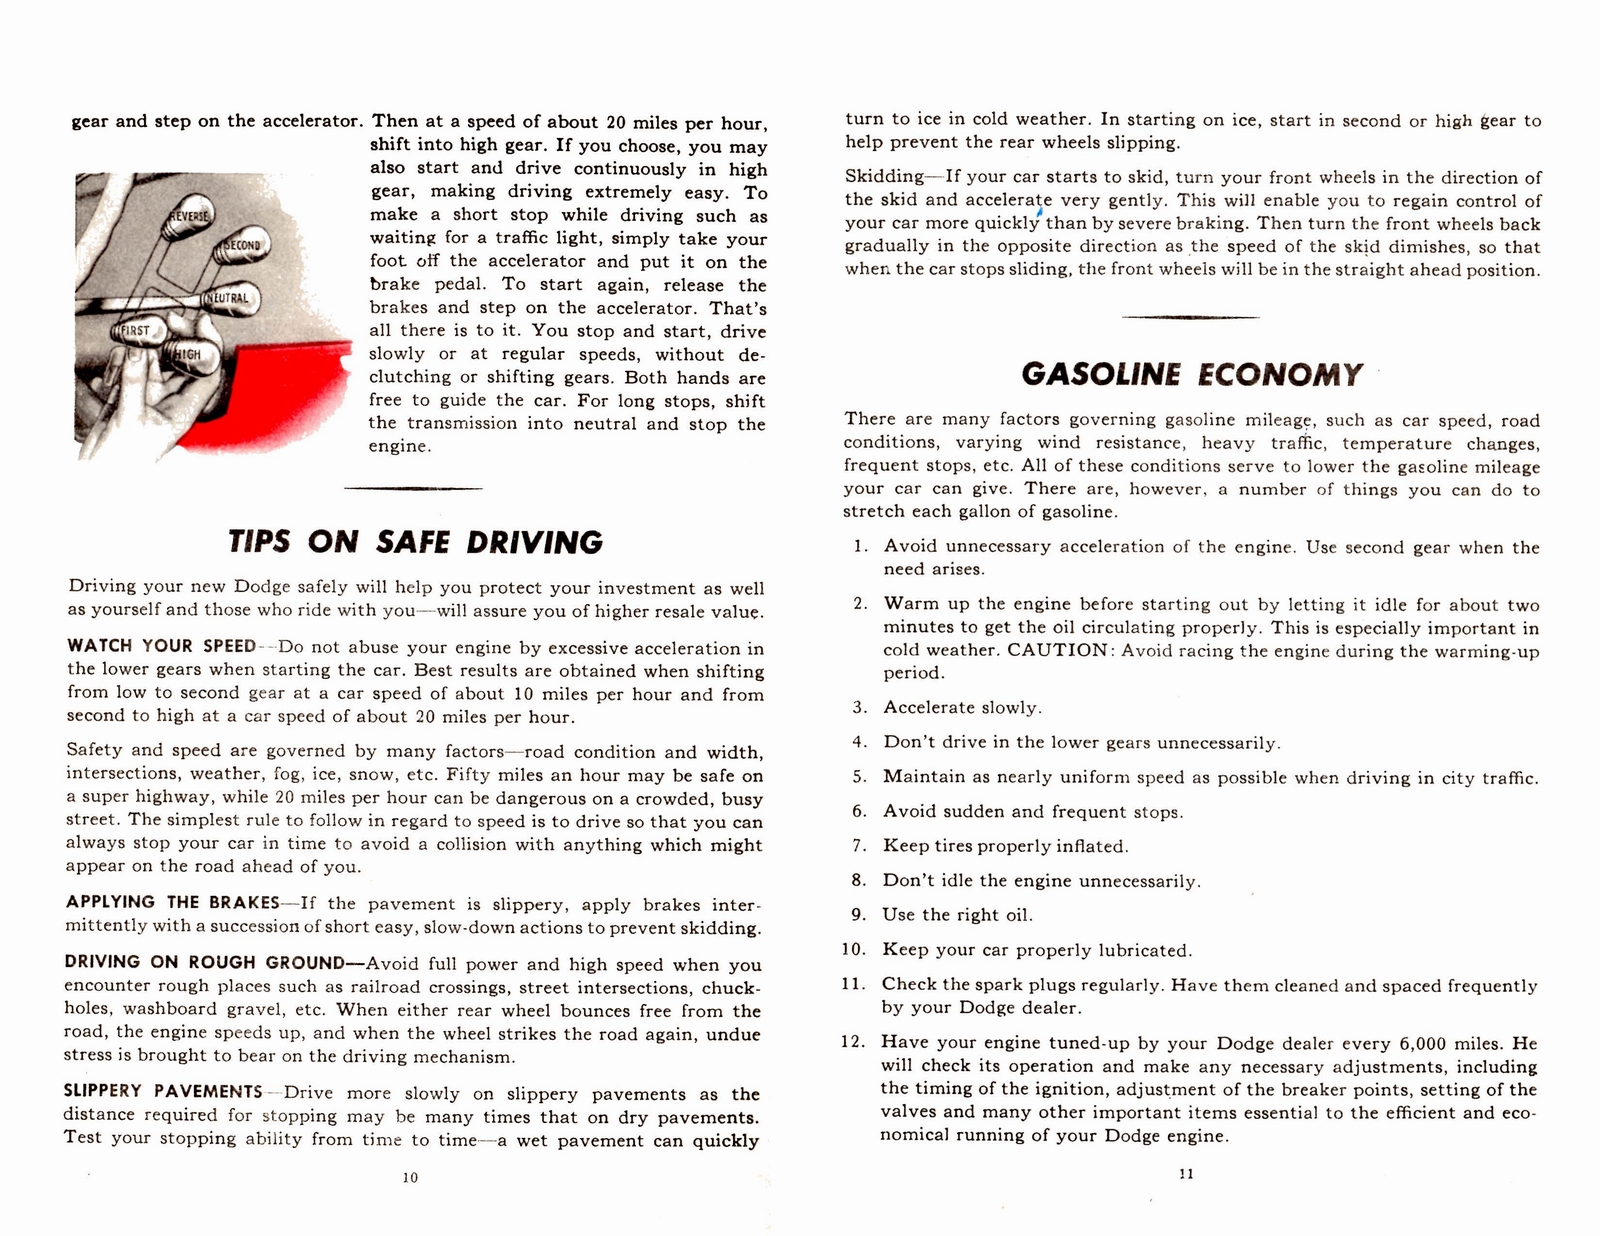 n_1947 Dodge Manual-10-11.jpg